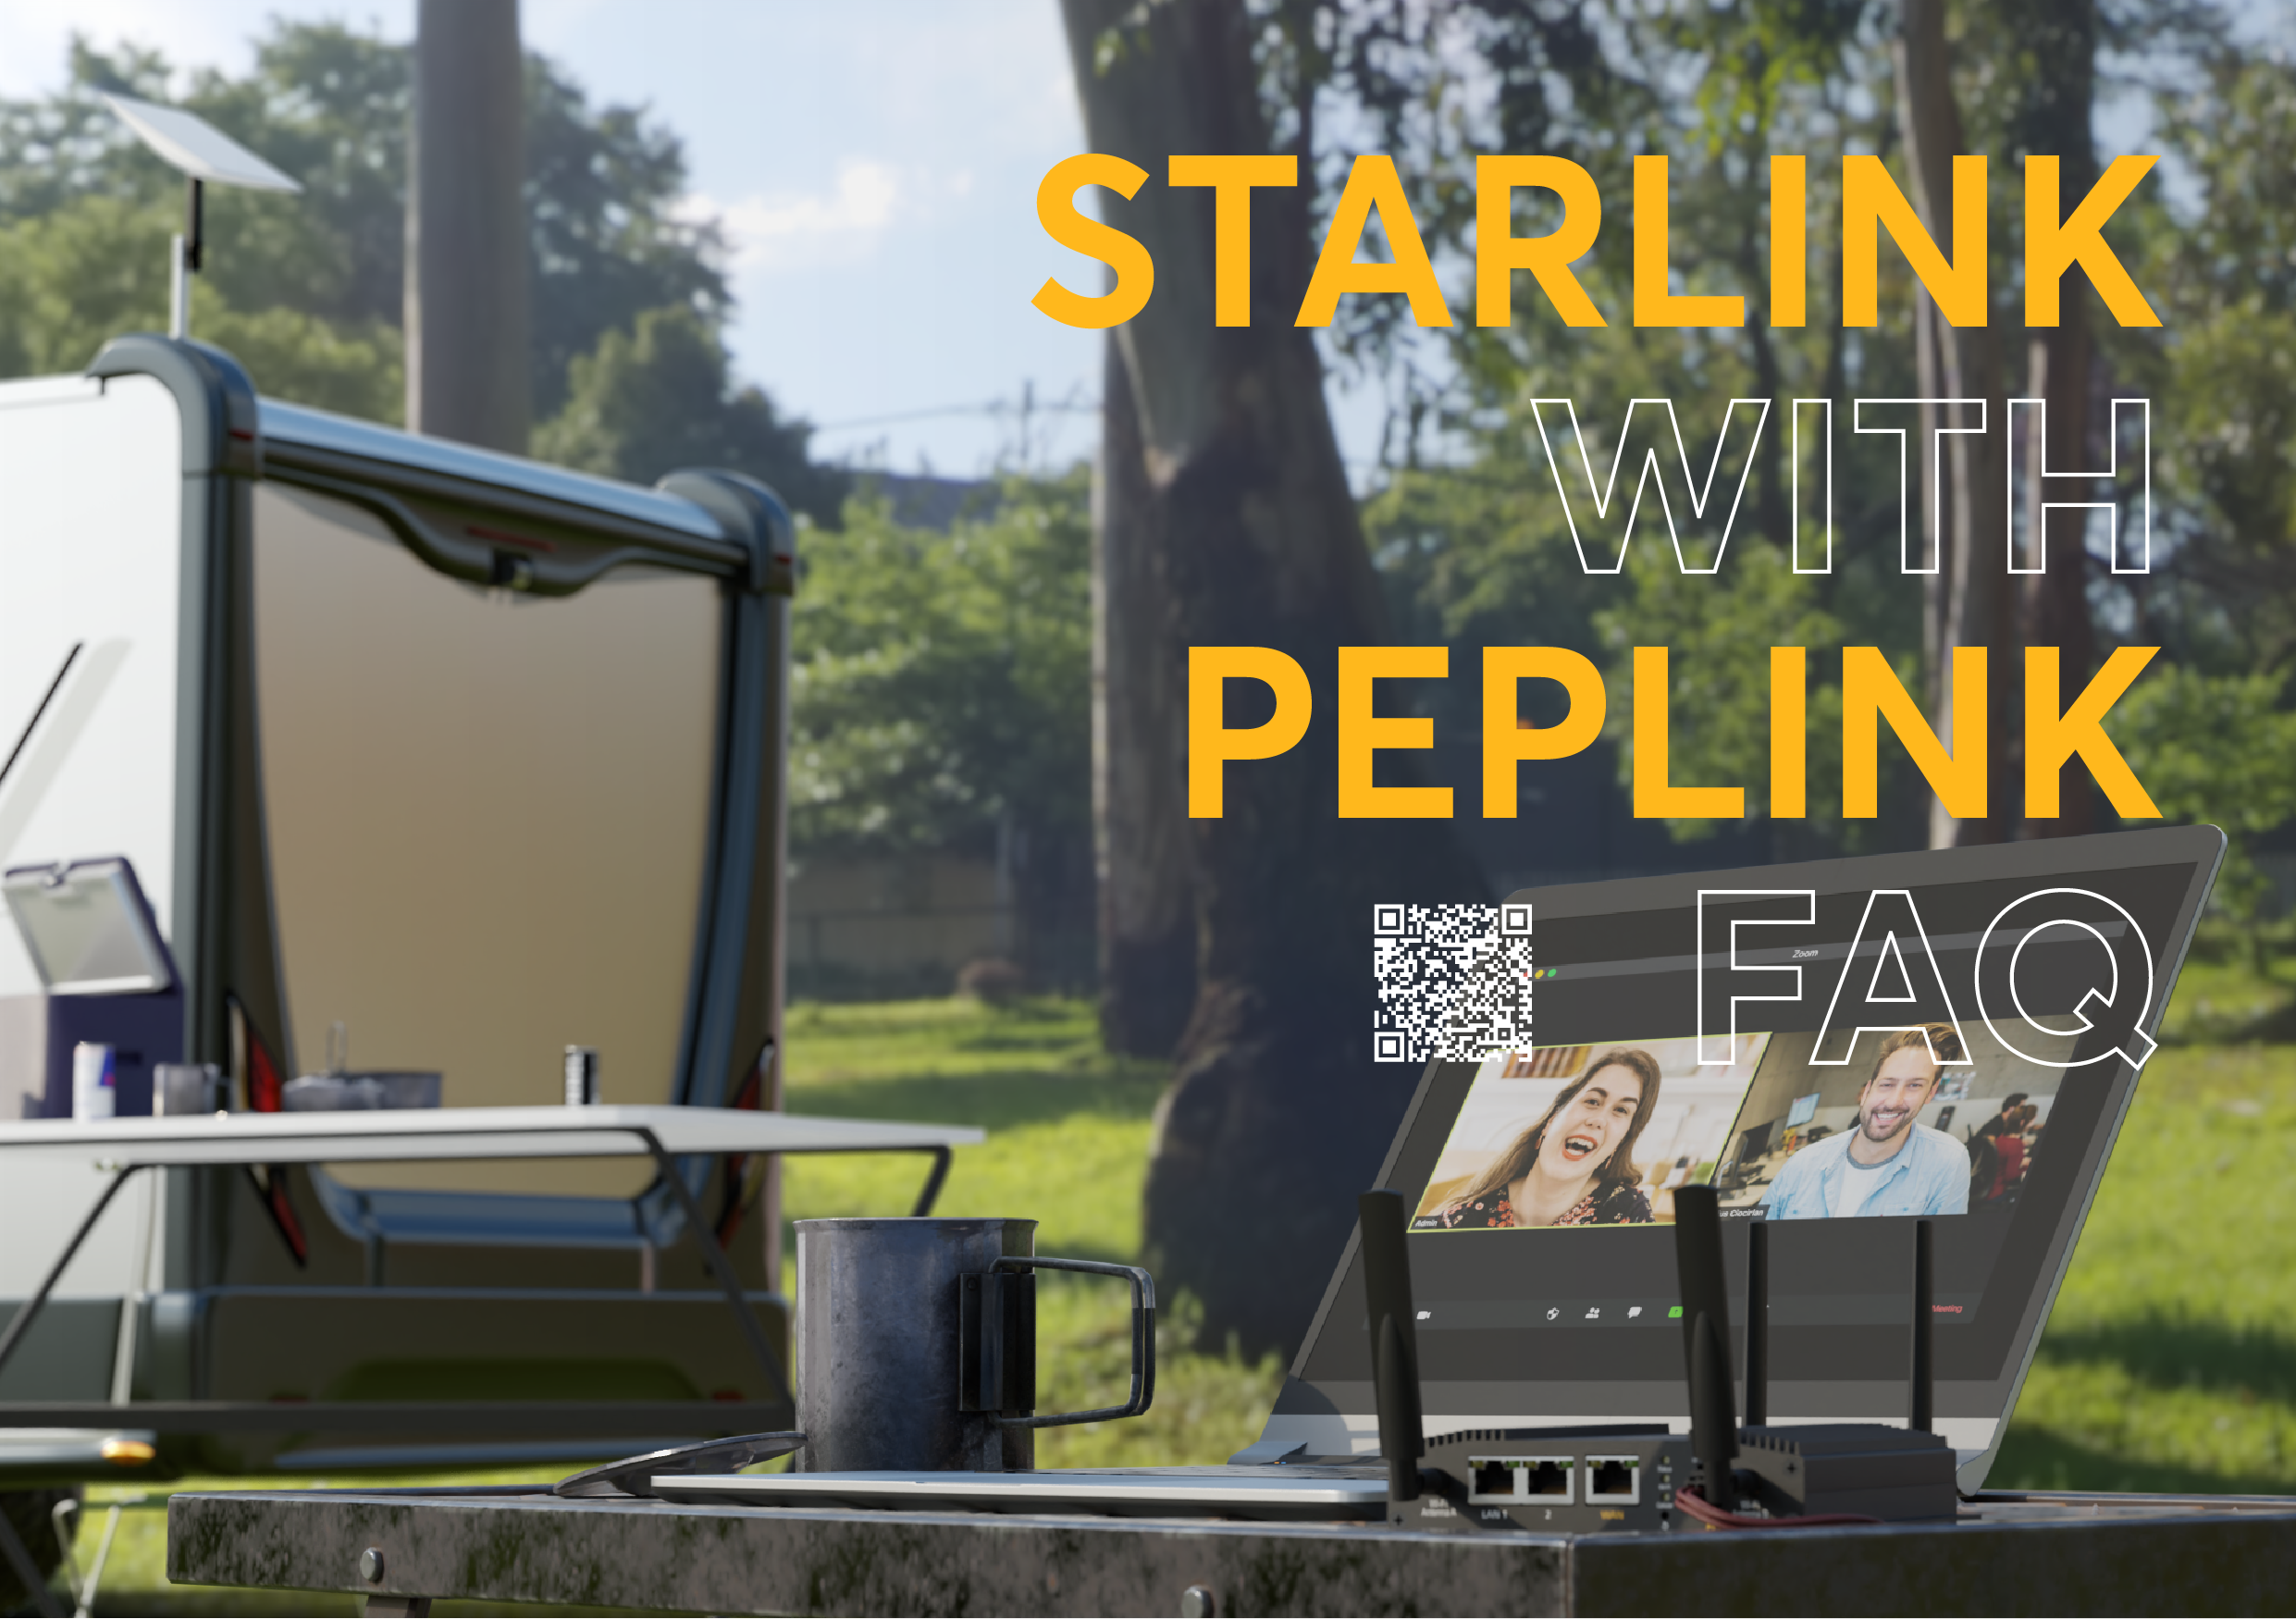 Starlink with Peplink FAQ